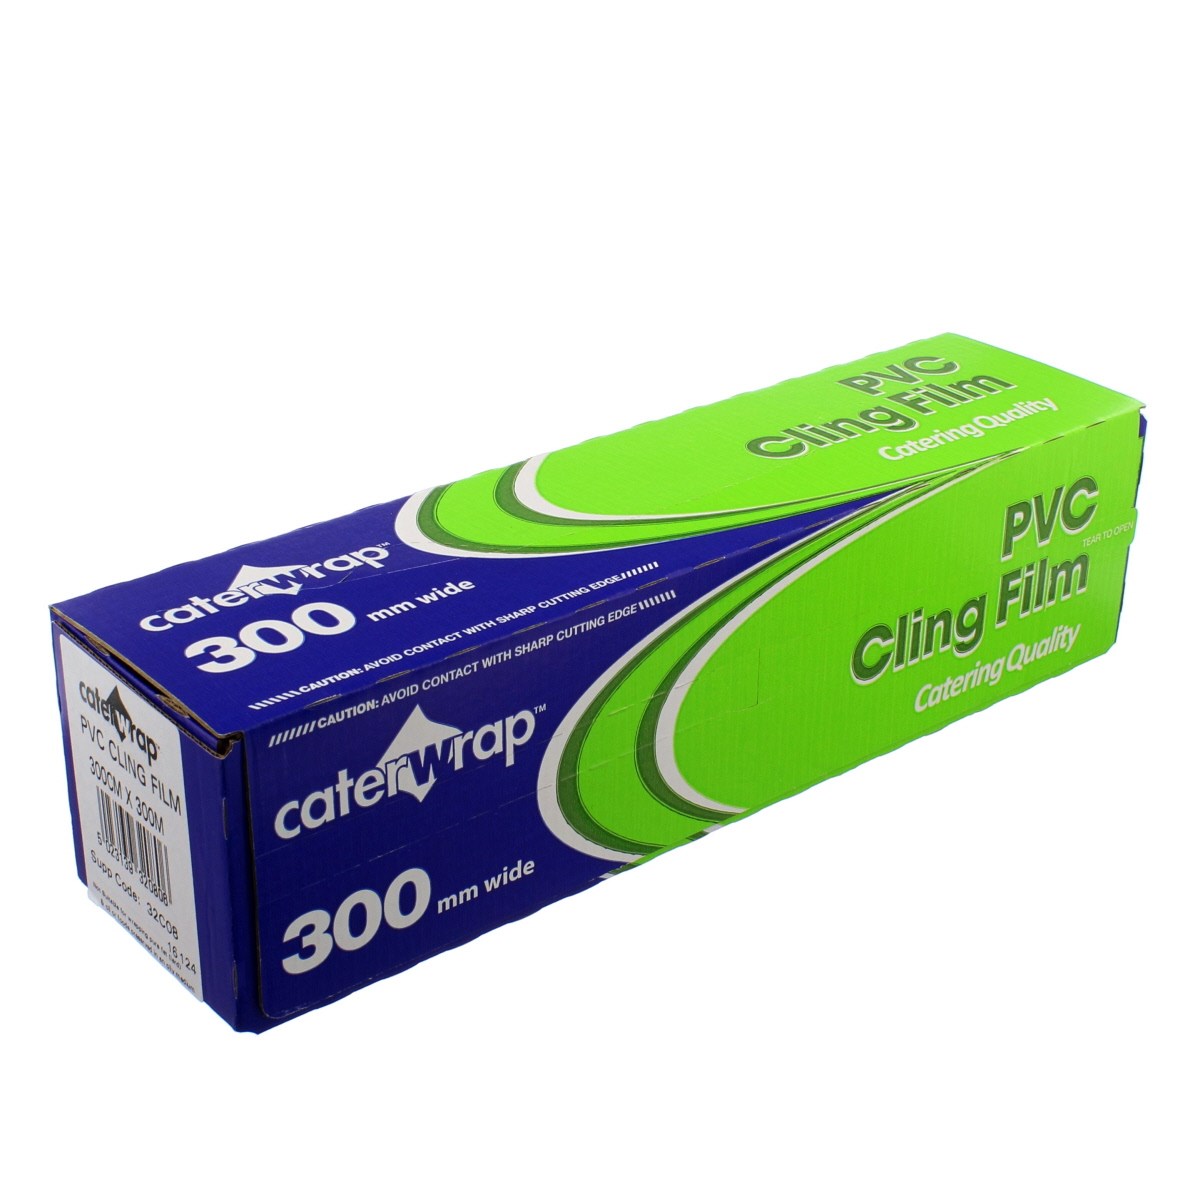 Caterwrap Catering Cling Film Cutter Box 300M